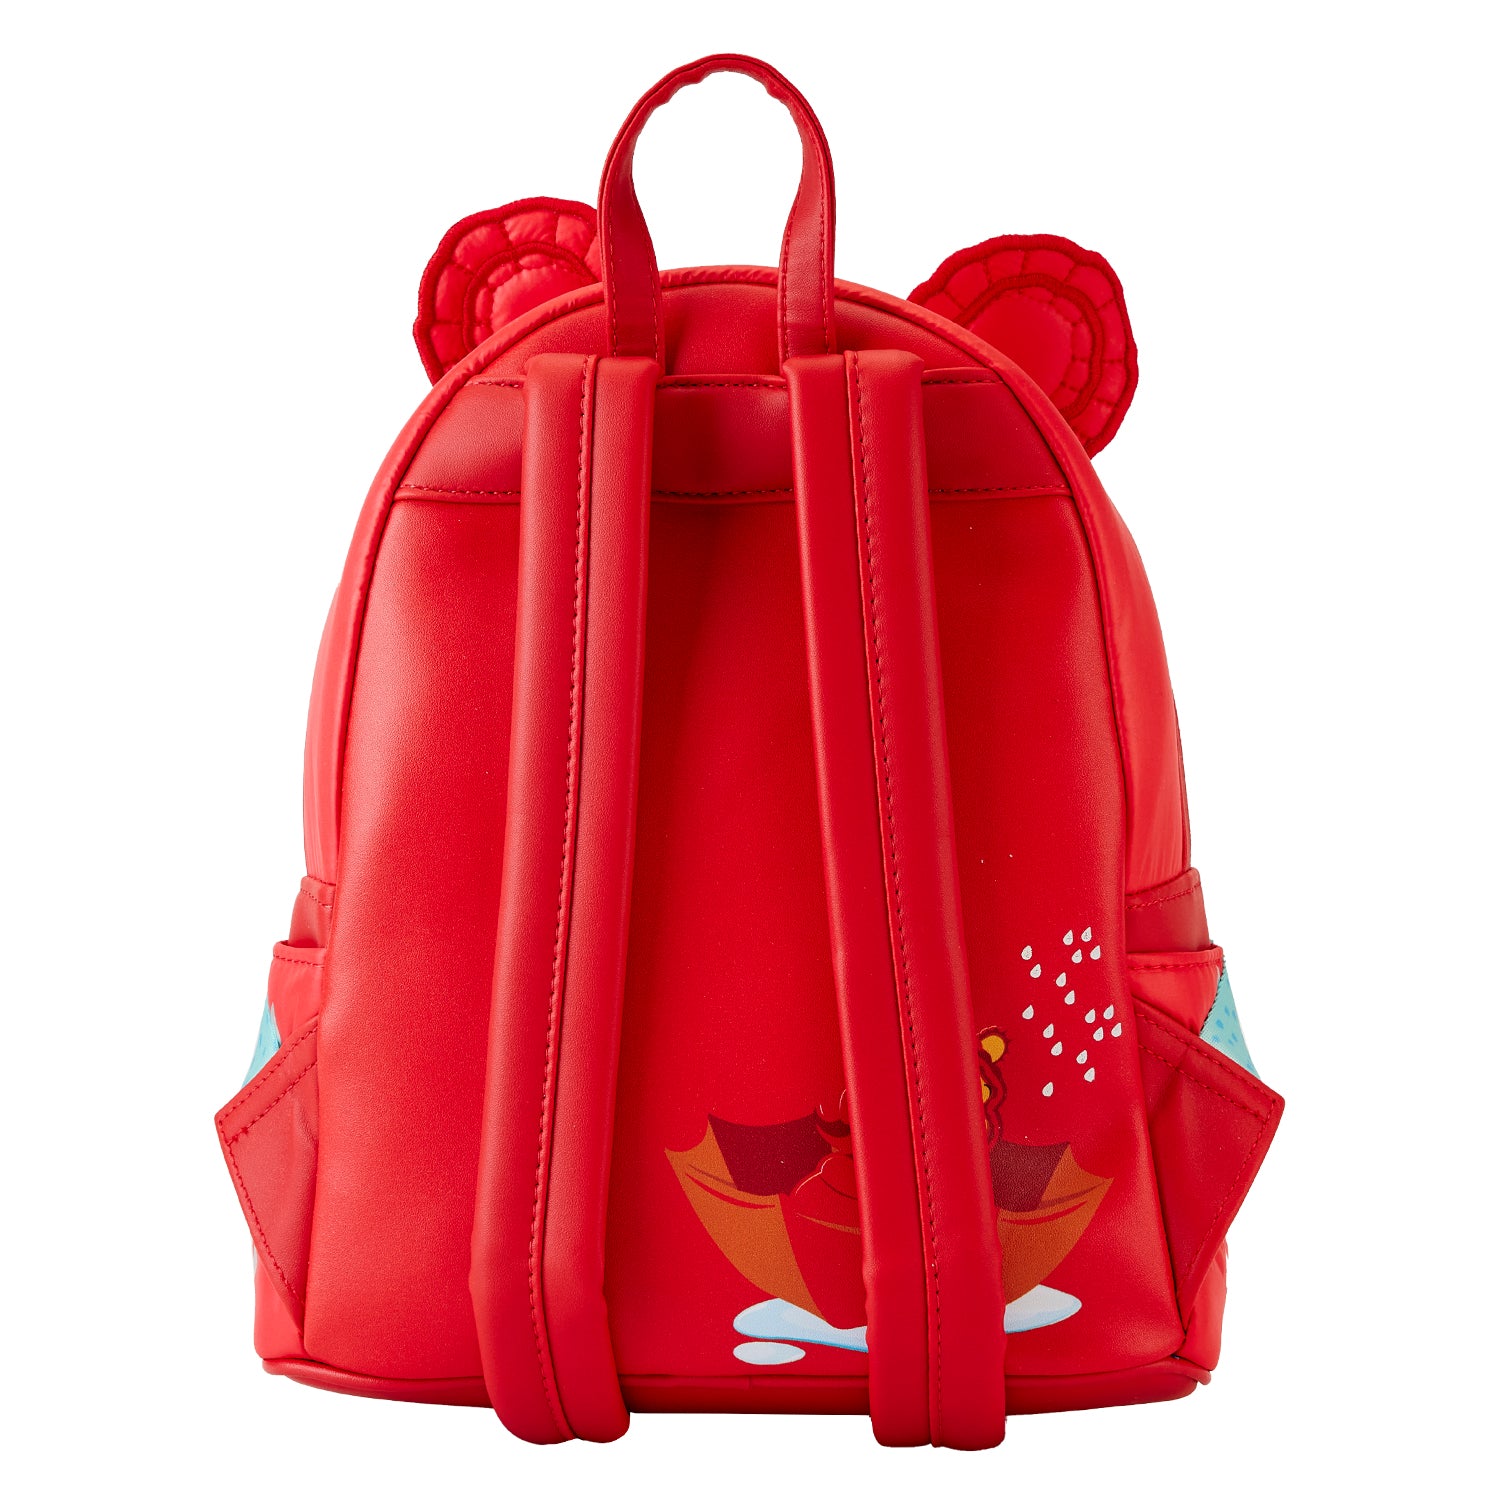 Loungefly x Disney Winnie the Pooh Puffer Jacket Cosplay Mini Backpack